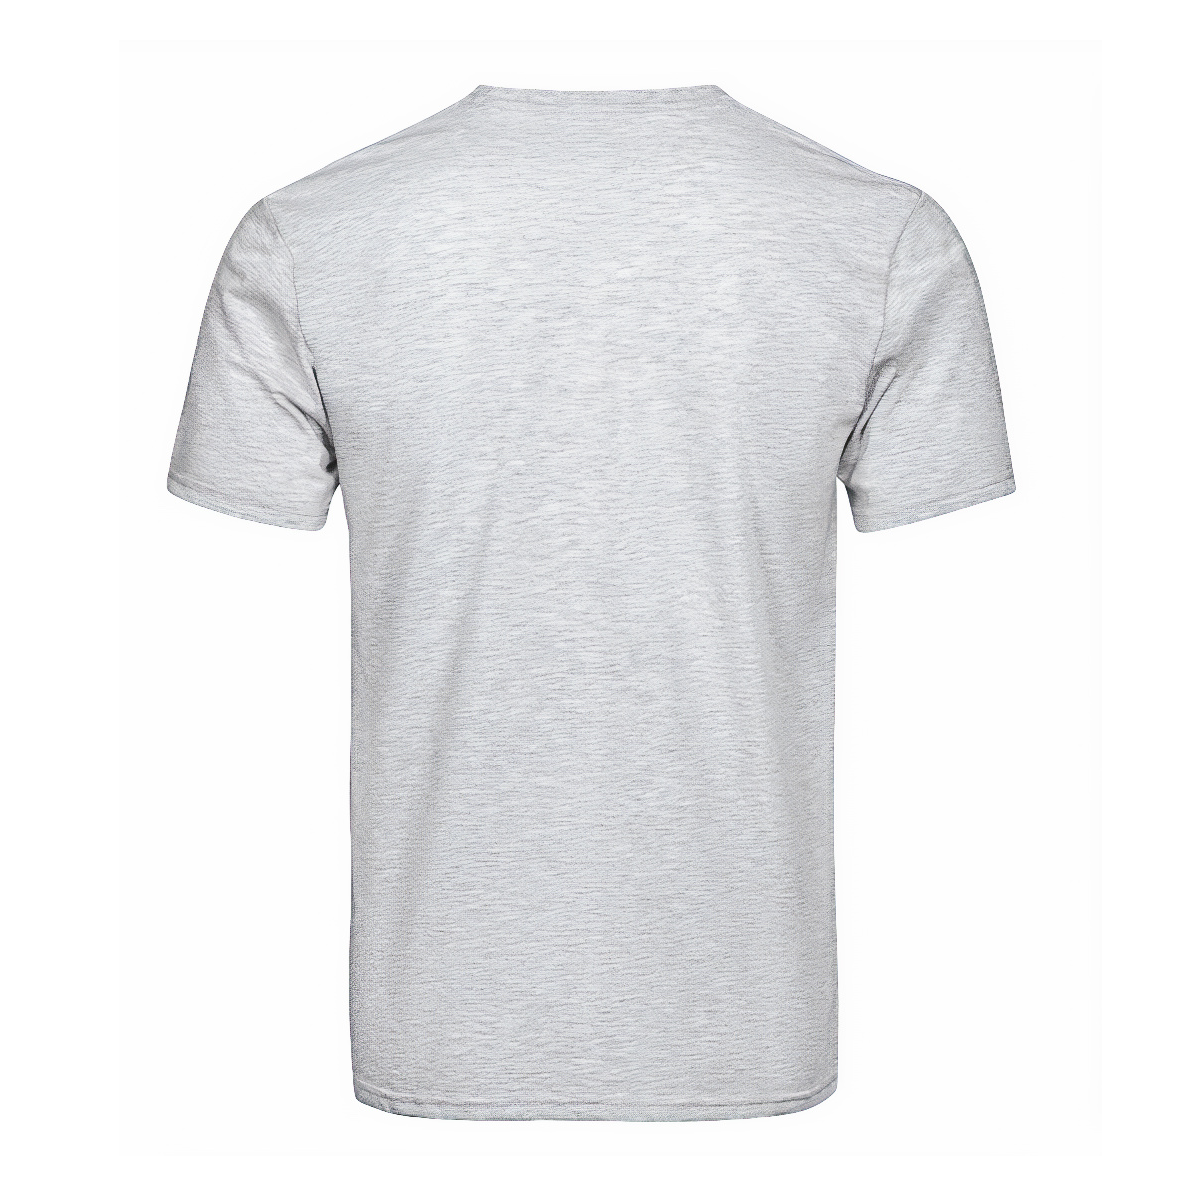 Colquhoun Tartan Crest T-shirt - I'm not yelling style